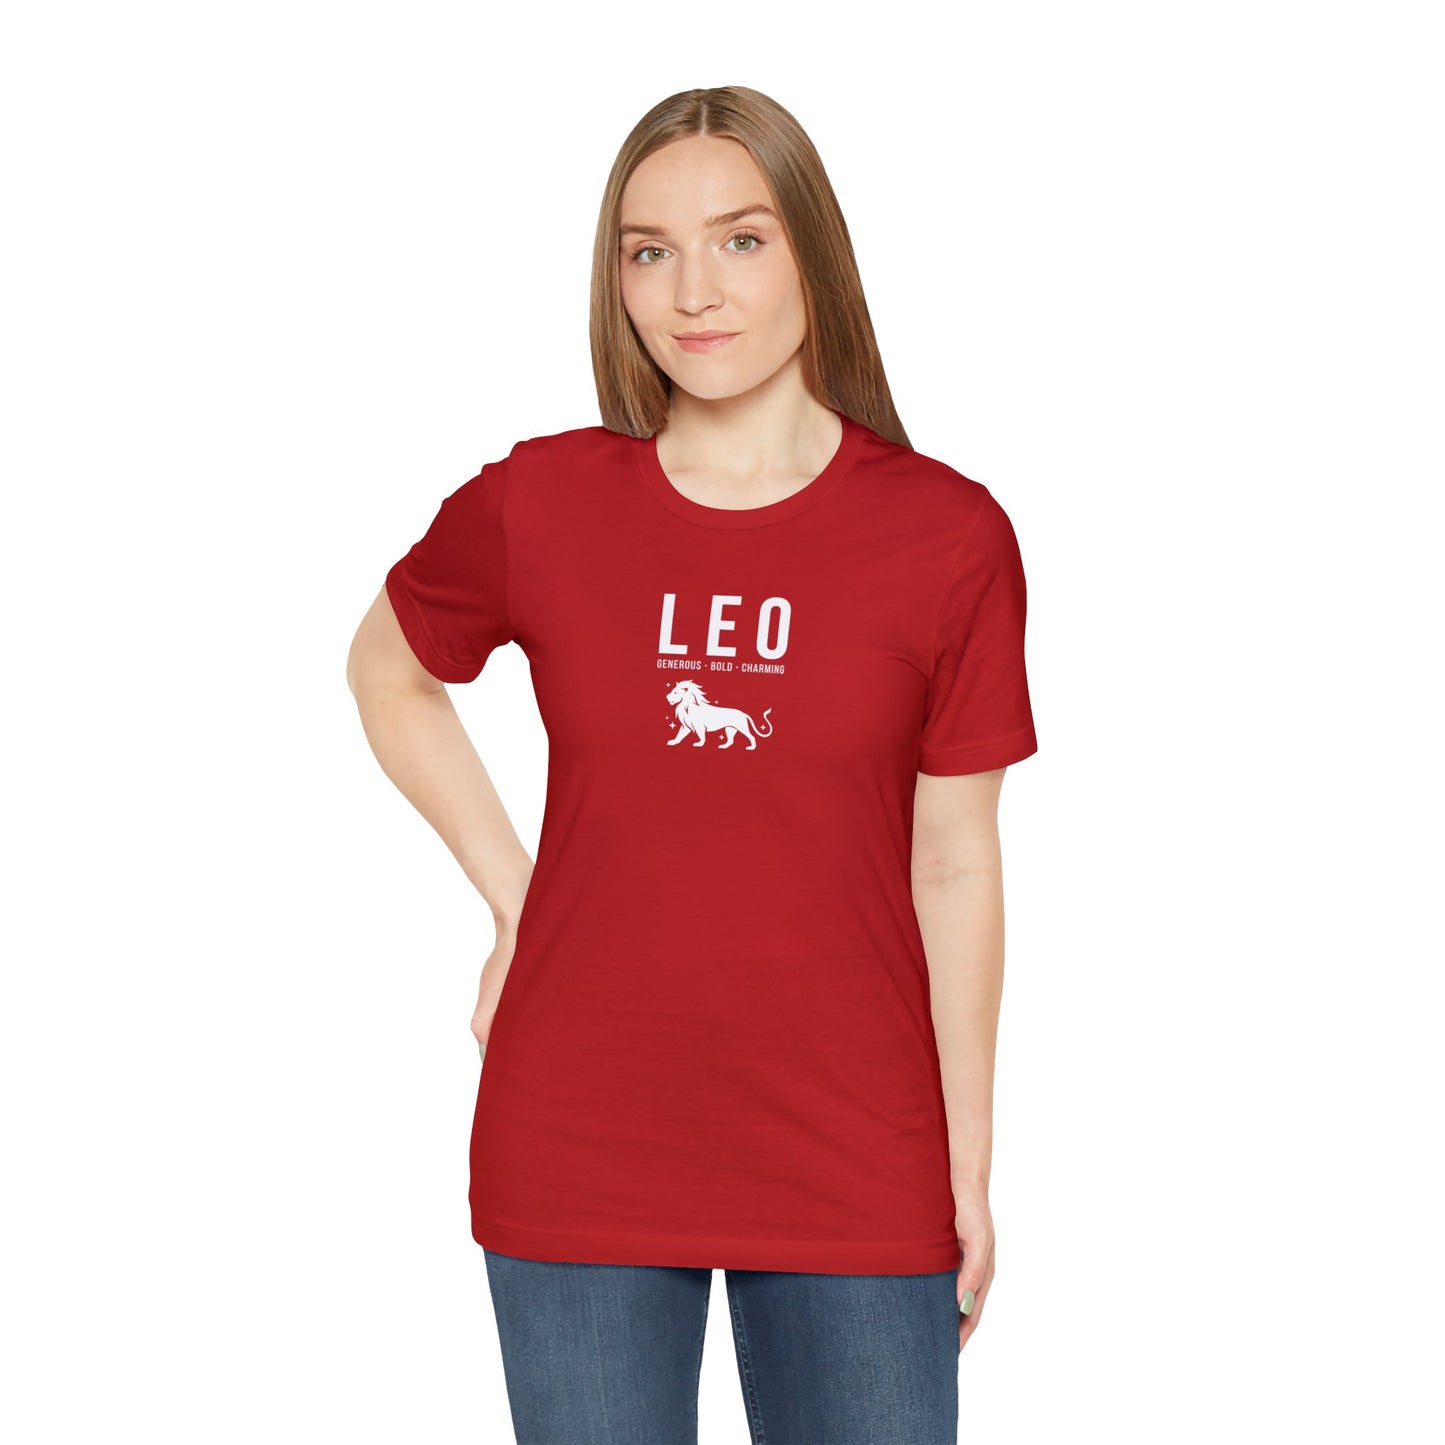 Leo Shirt Unisex Short Sleeve Tee